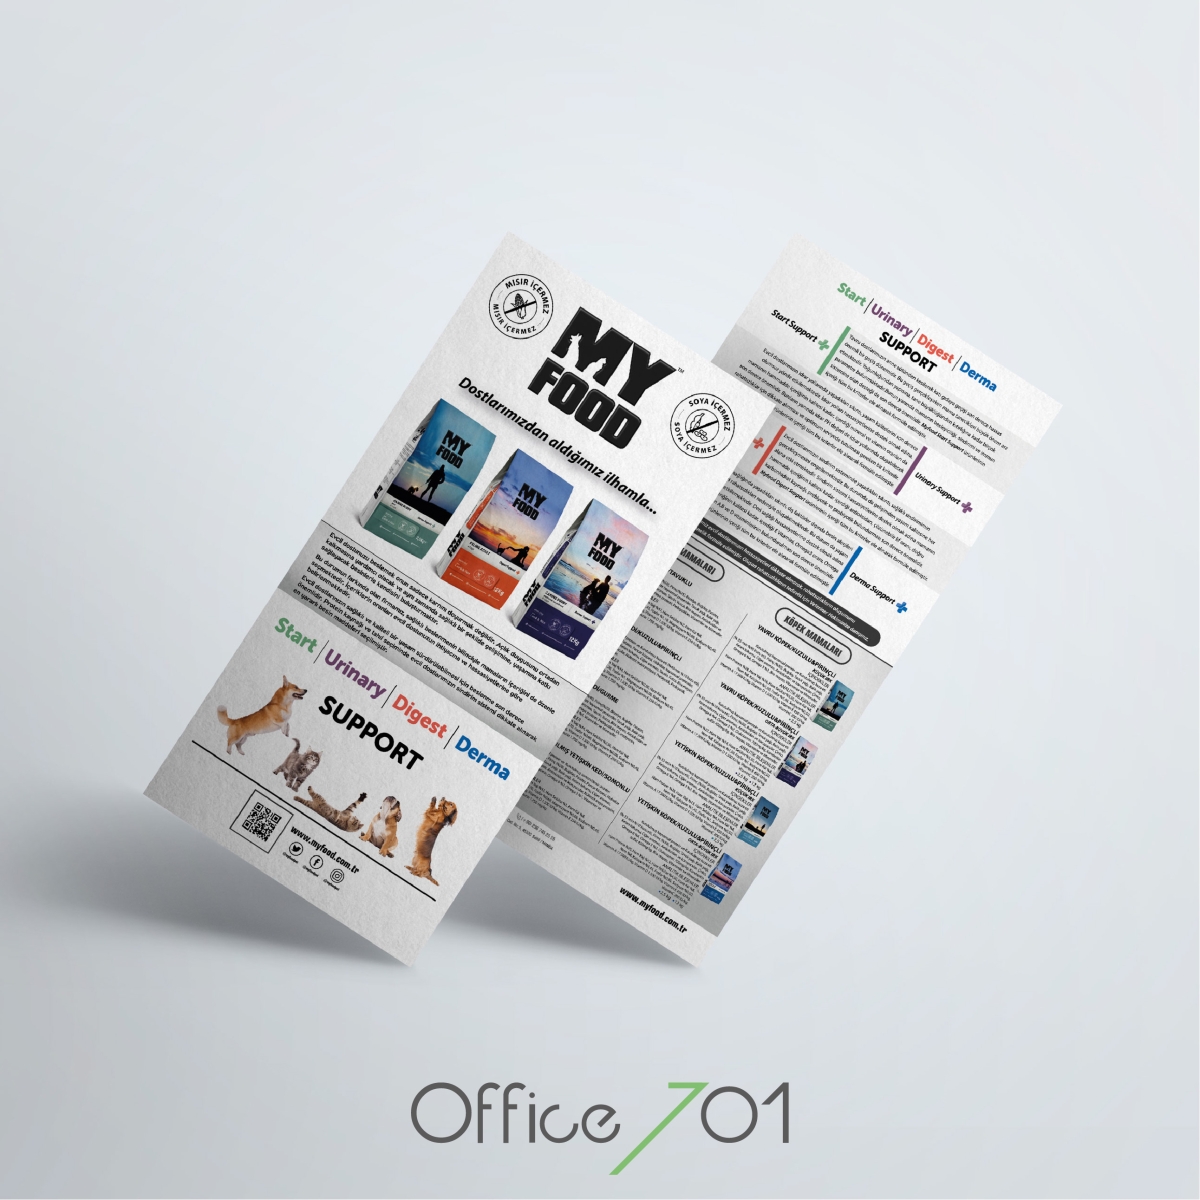 Office701 | Myfood Broşür Tasarımı